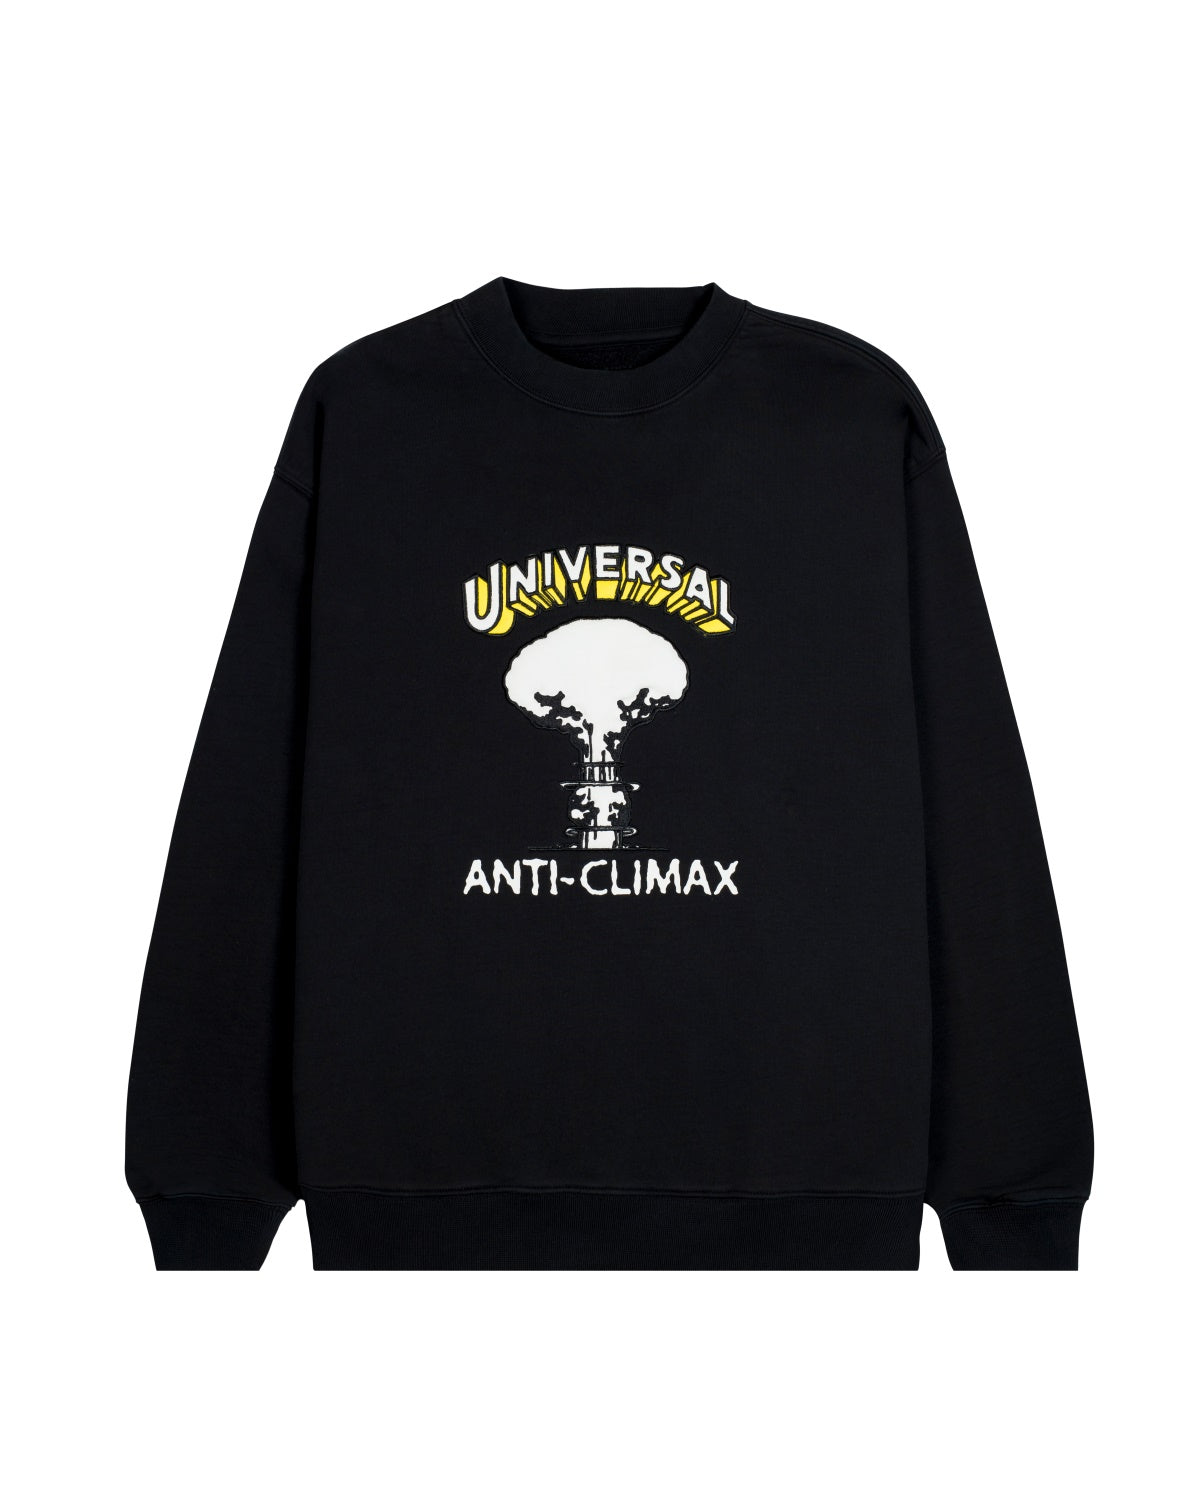 Universal Anti-Climax Crewneck Sweatshirt - Washed Black 1